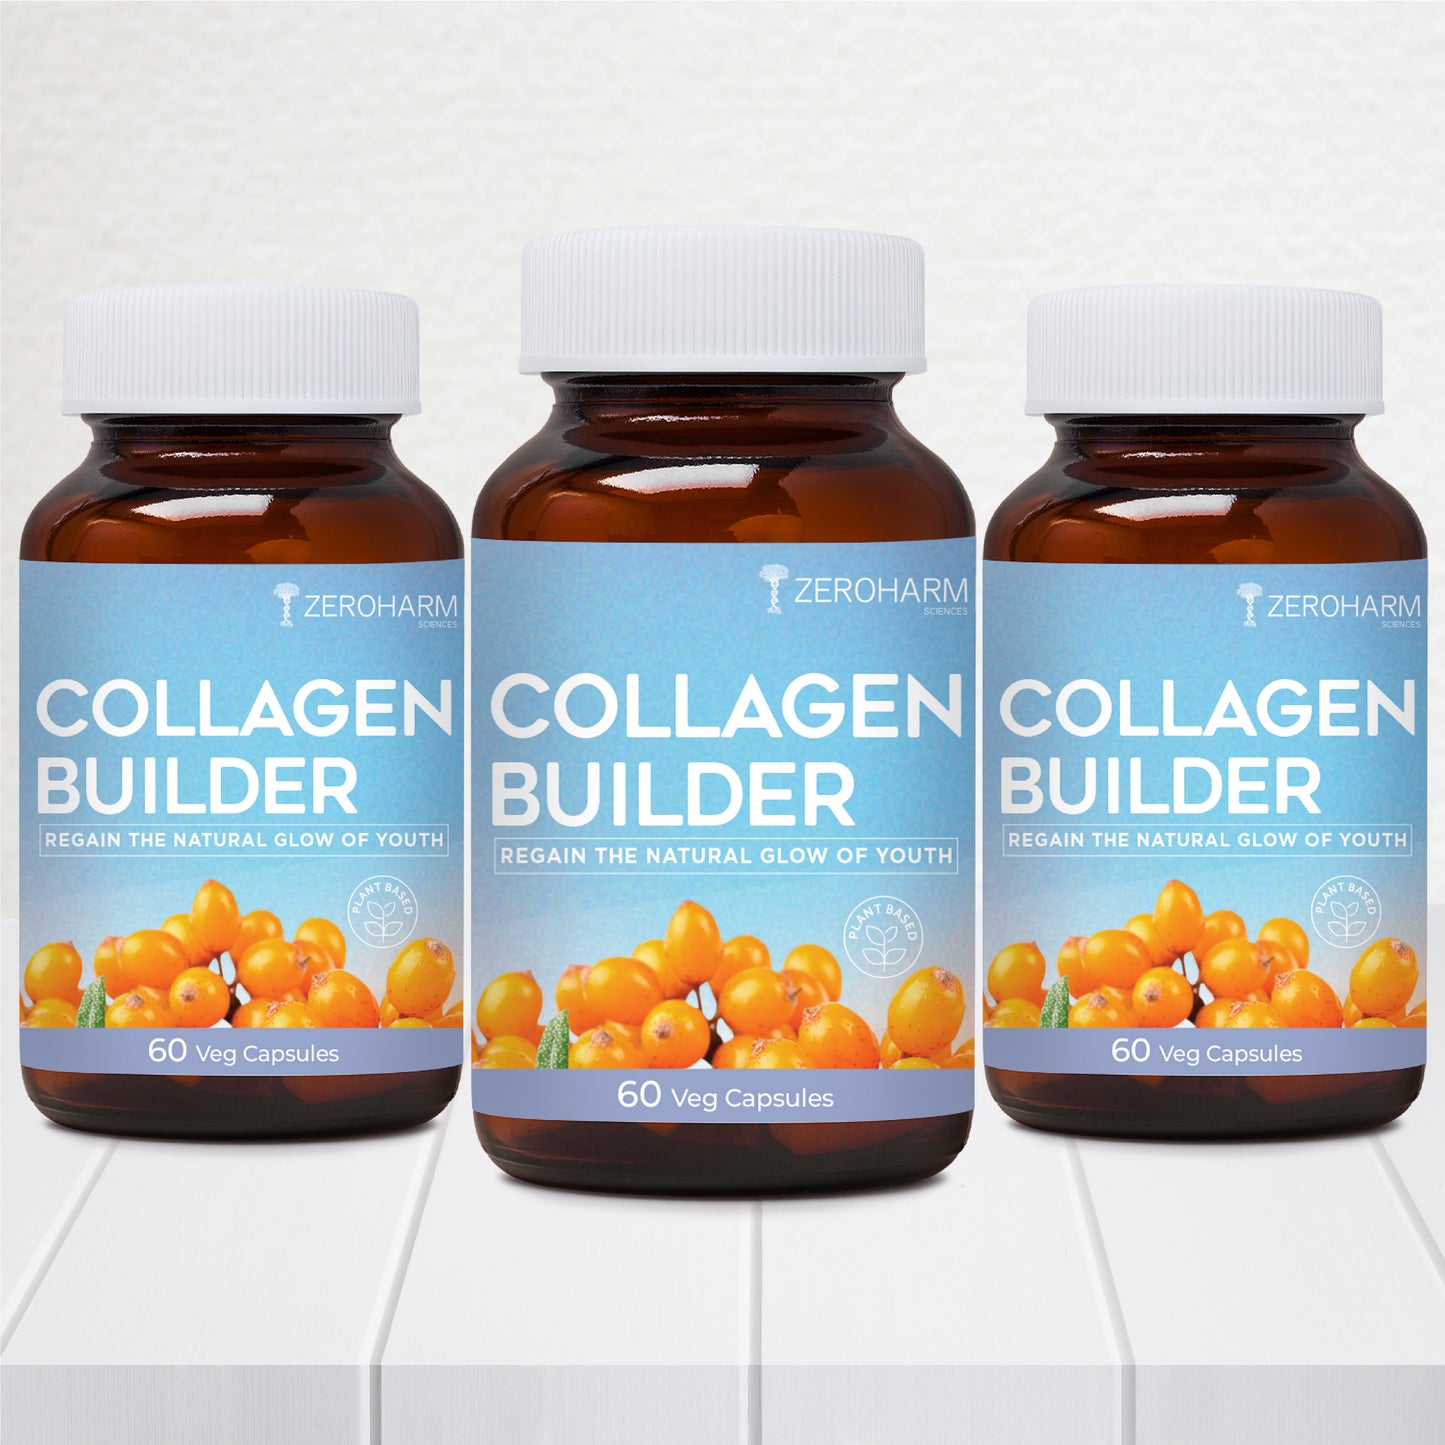 Collagen Builder Supplements for Anti-Ageing